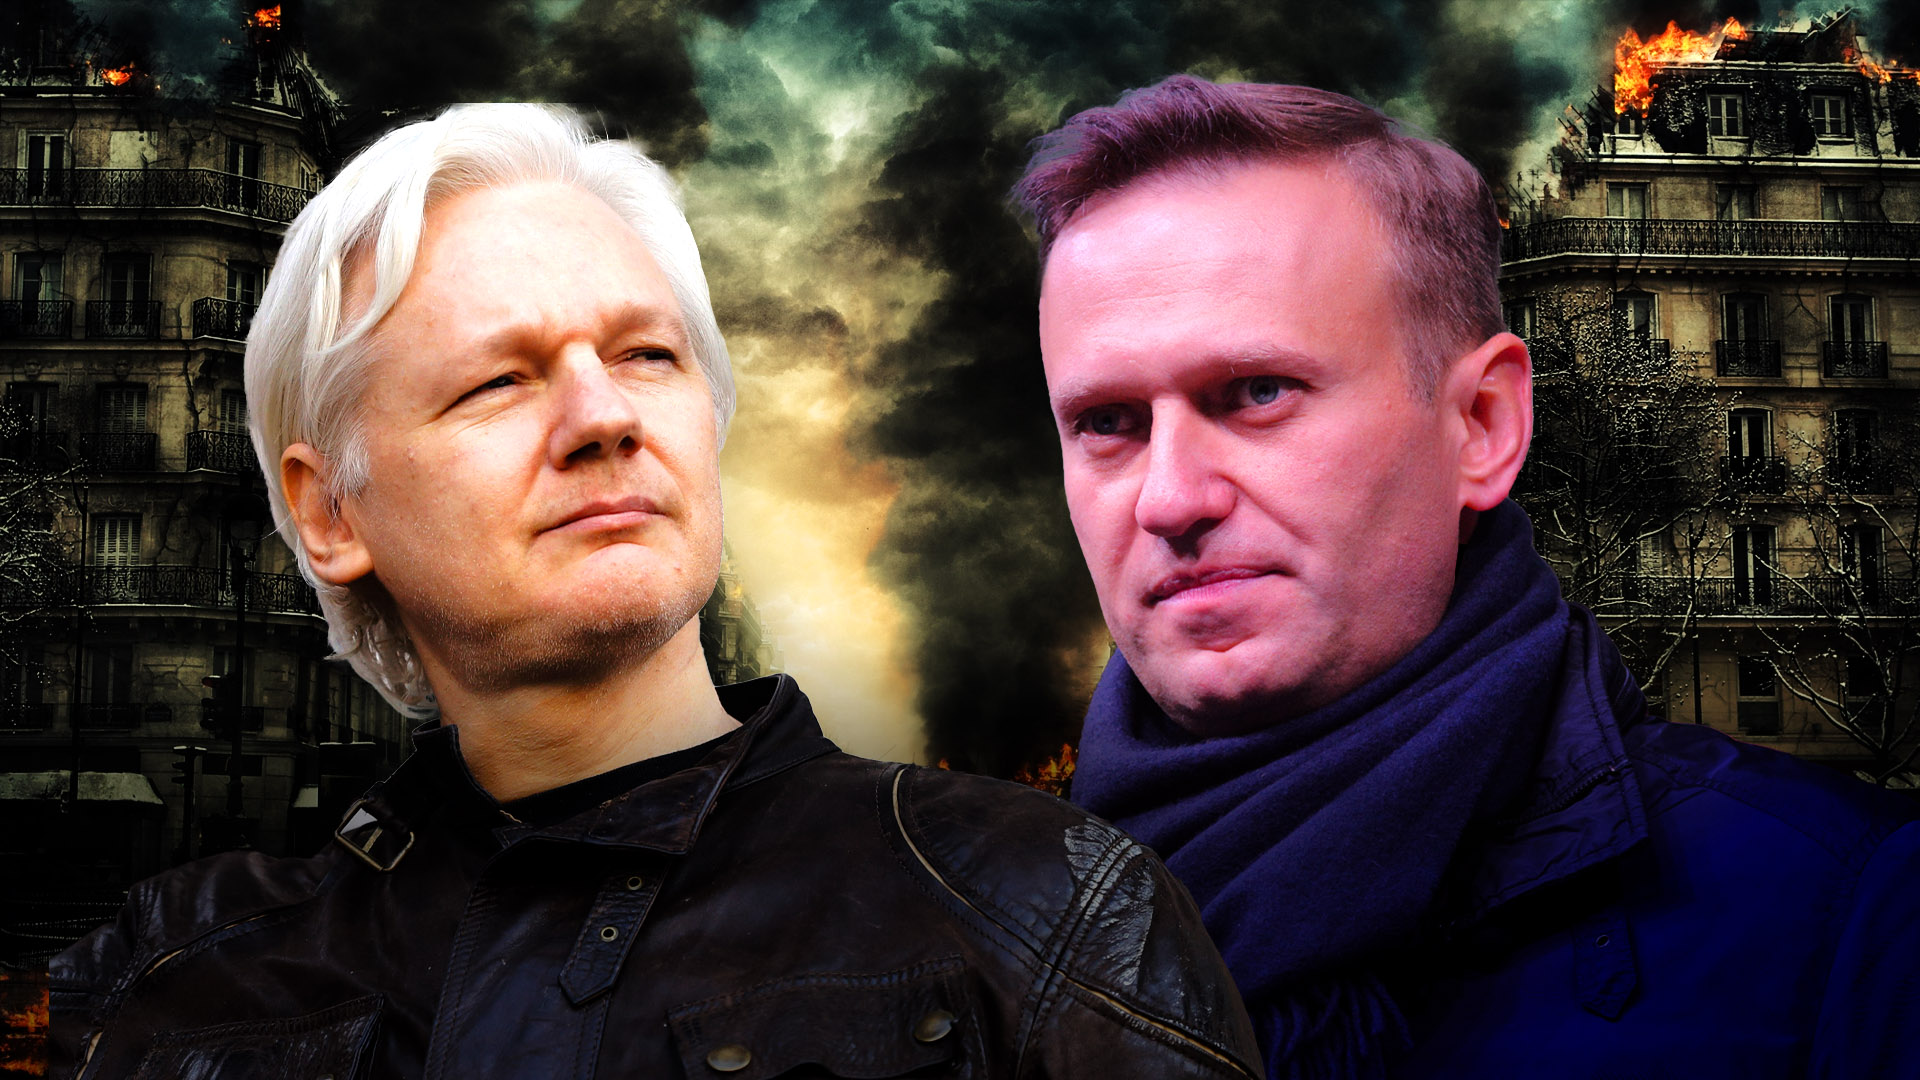 Media heroes and traitors - Assange vs Navalny